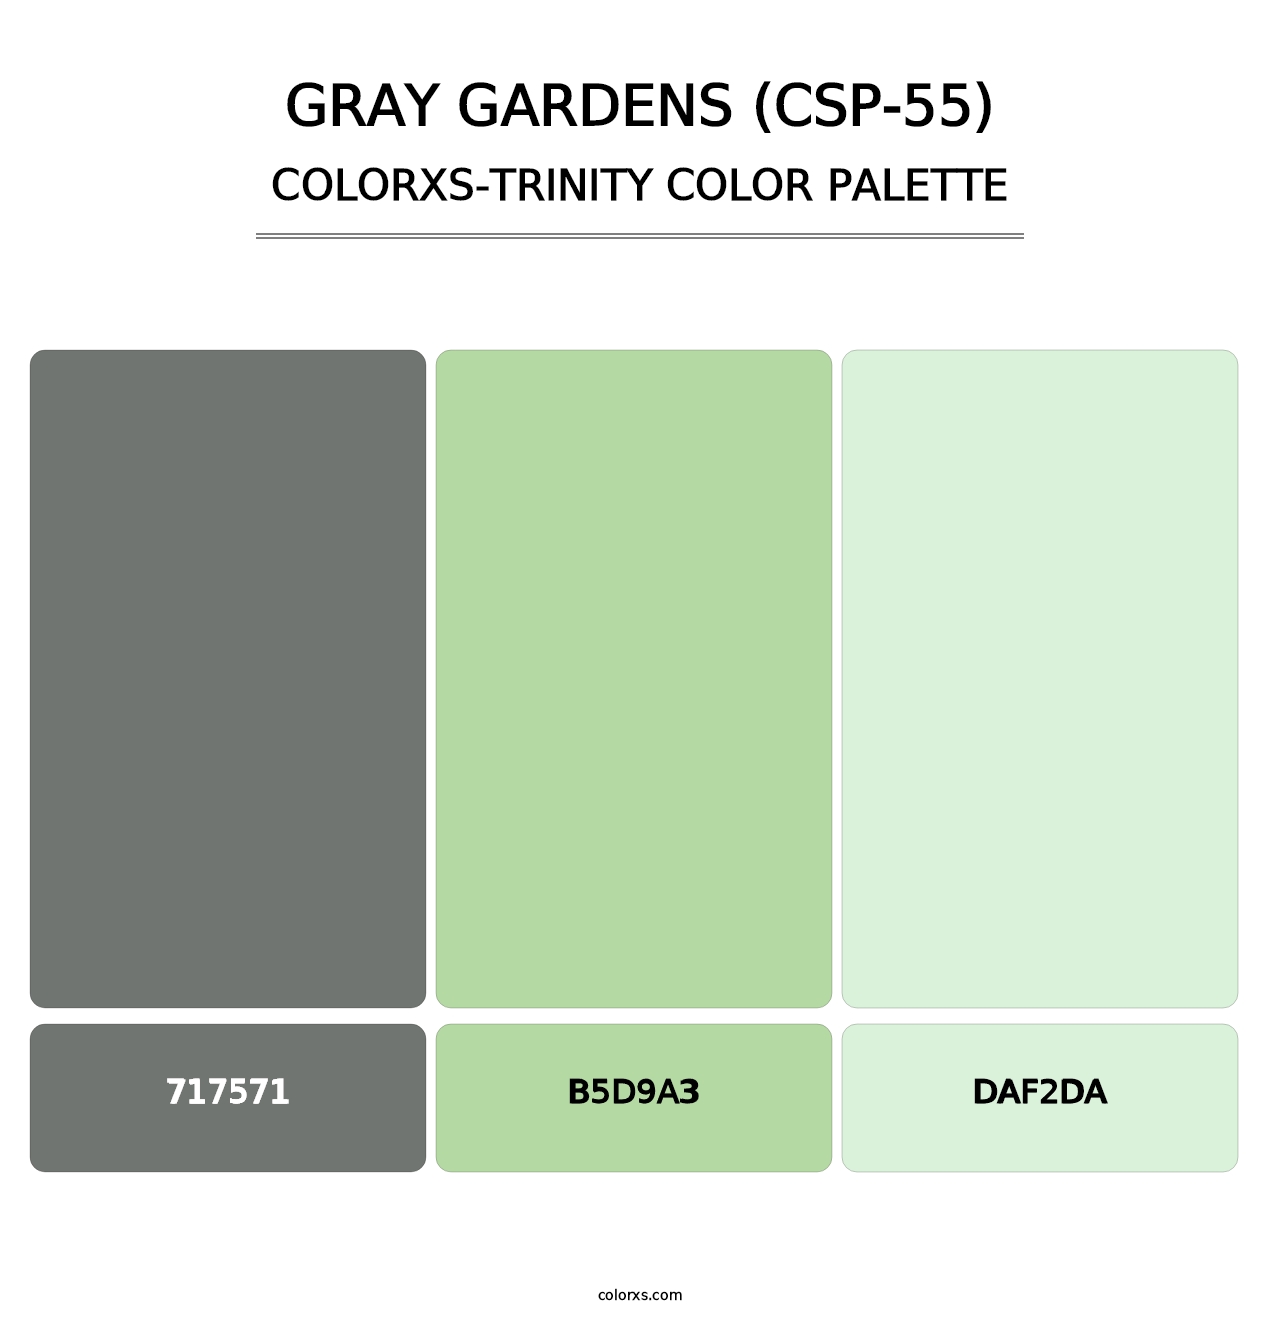 Gray Gardens (CSP-55) - Colorxs Trinity Palette